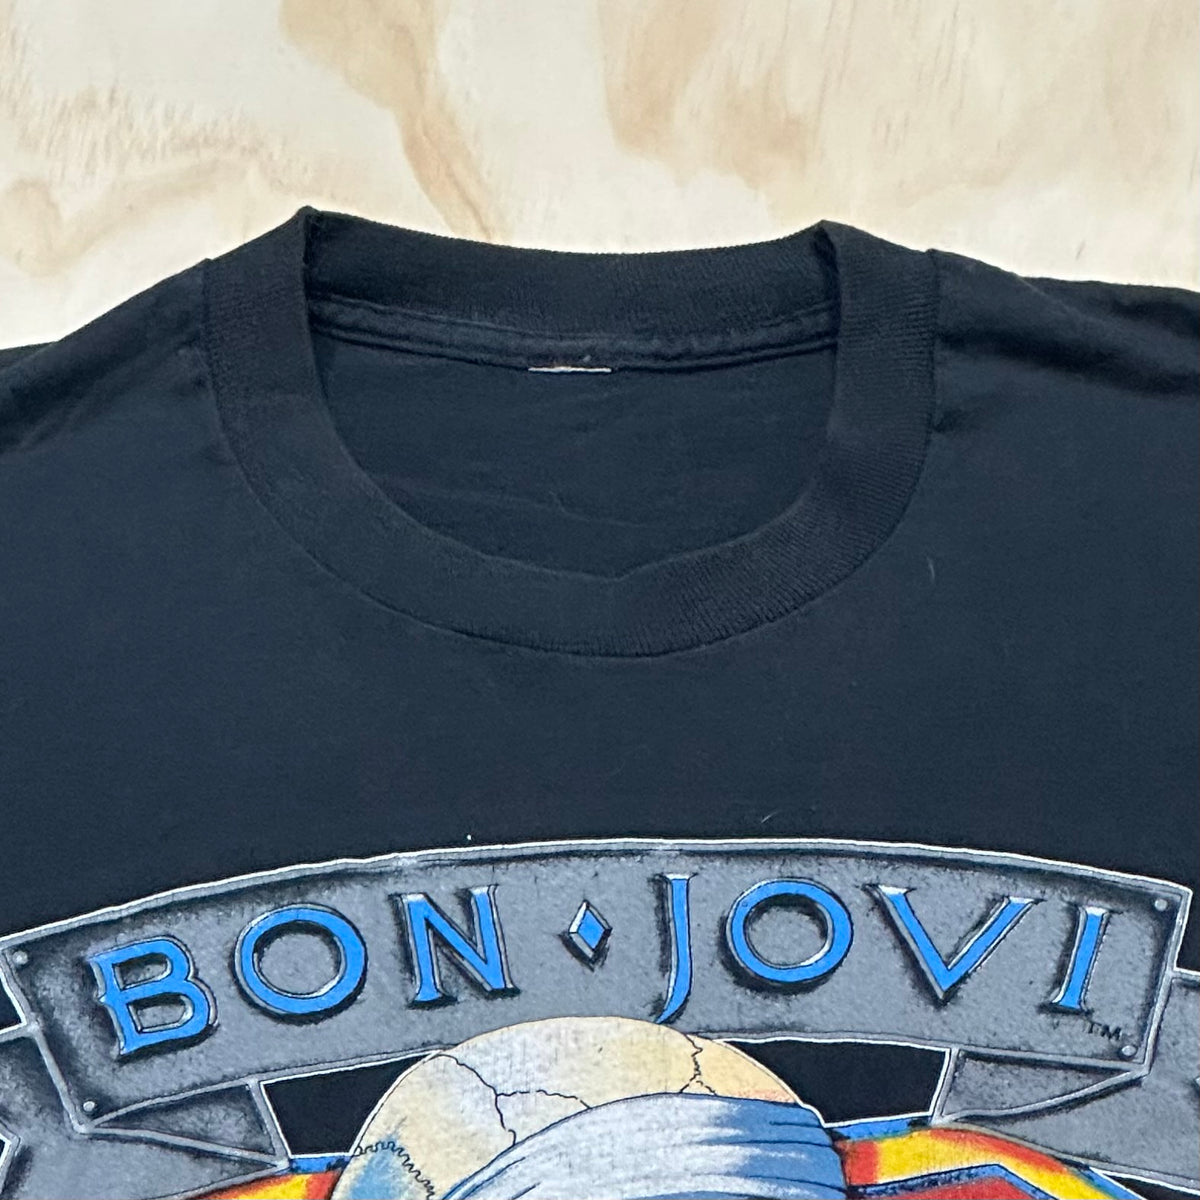 1989 Vintage Bon Jovi tour tee 'We're back kickin' ass' shirt